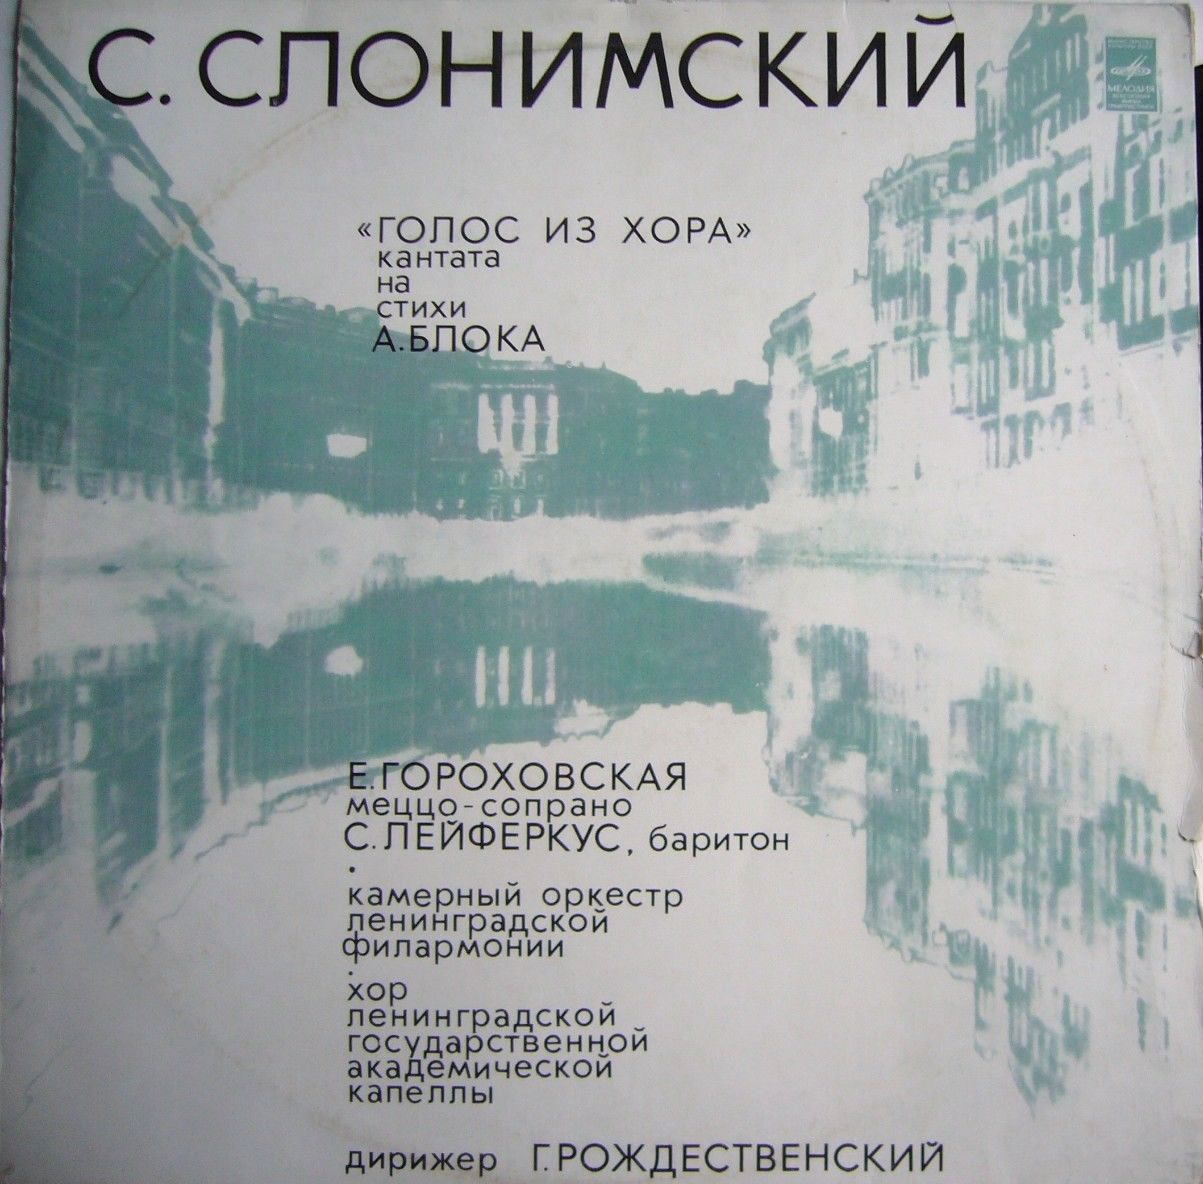 С. СЛОНИМСКИЙ (1931): «Голос из хора», кантата на стихи А. Блока.